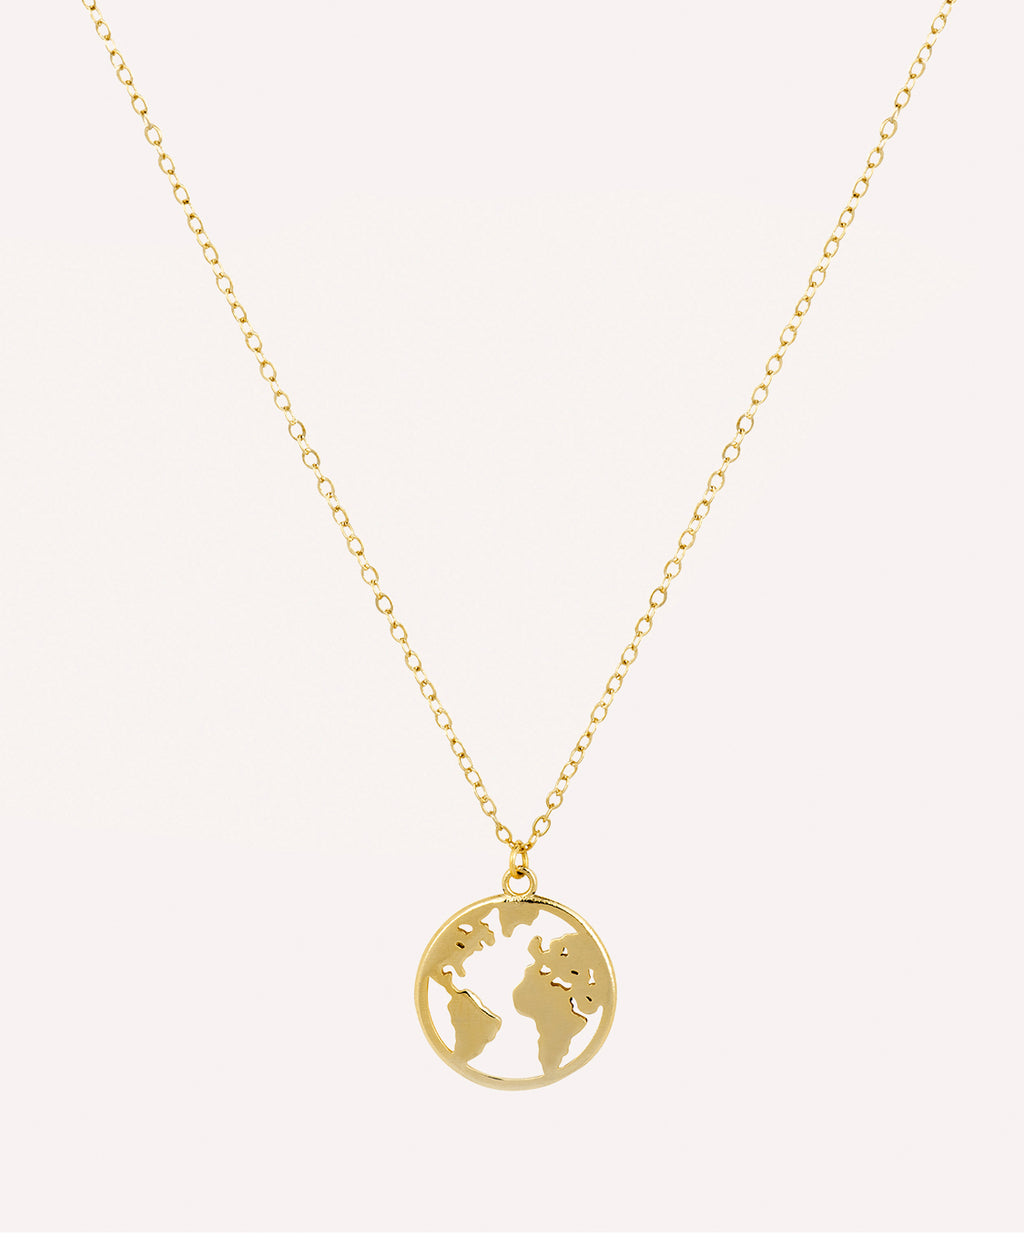 Globe pendant gold necklace